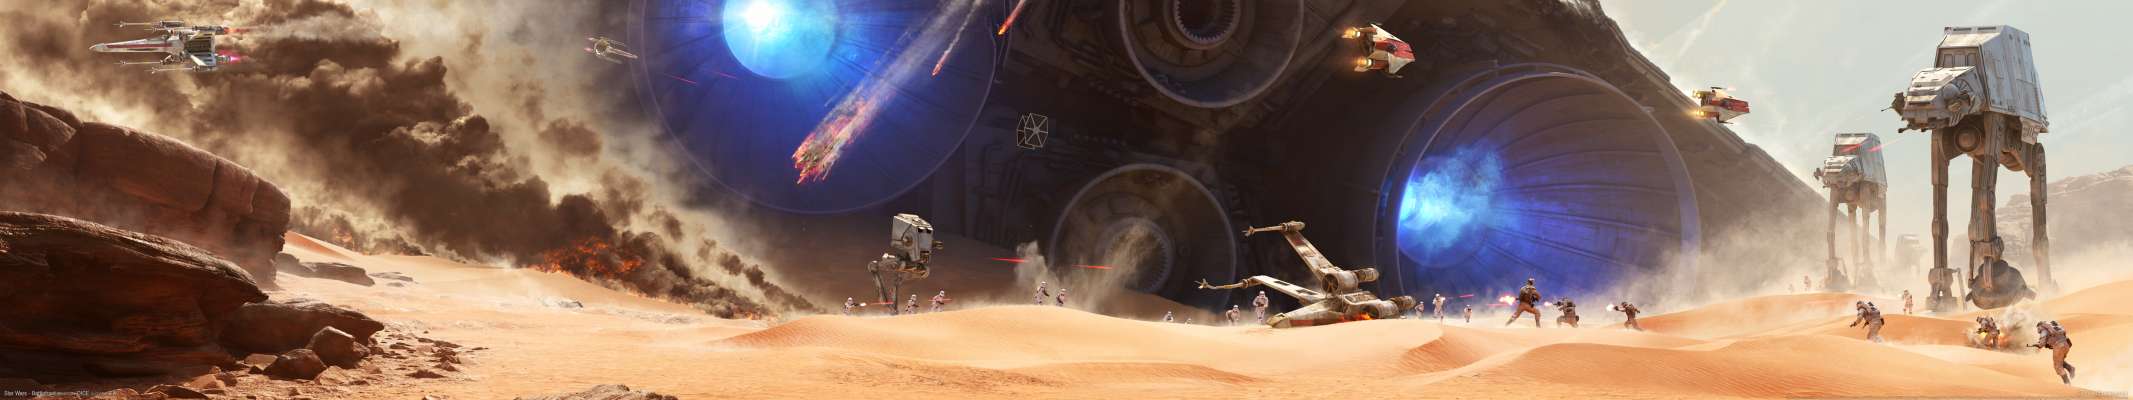 Star Wars Battlefront Triple Screen Wallpaper Or Background